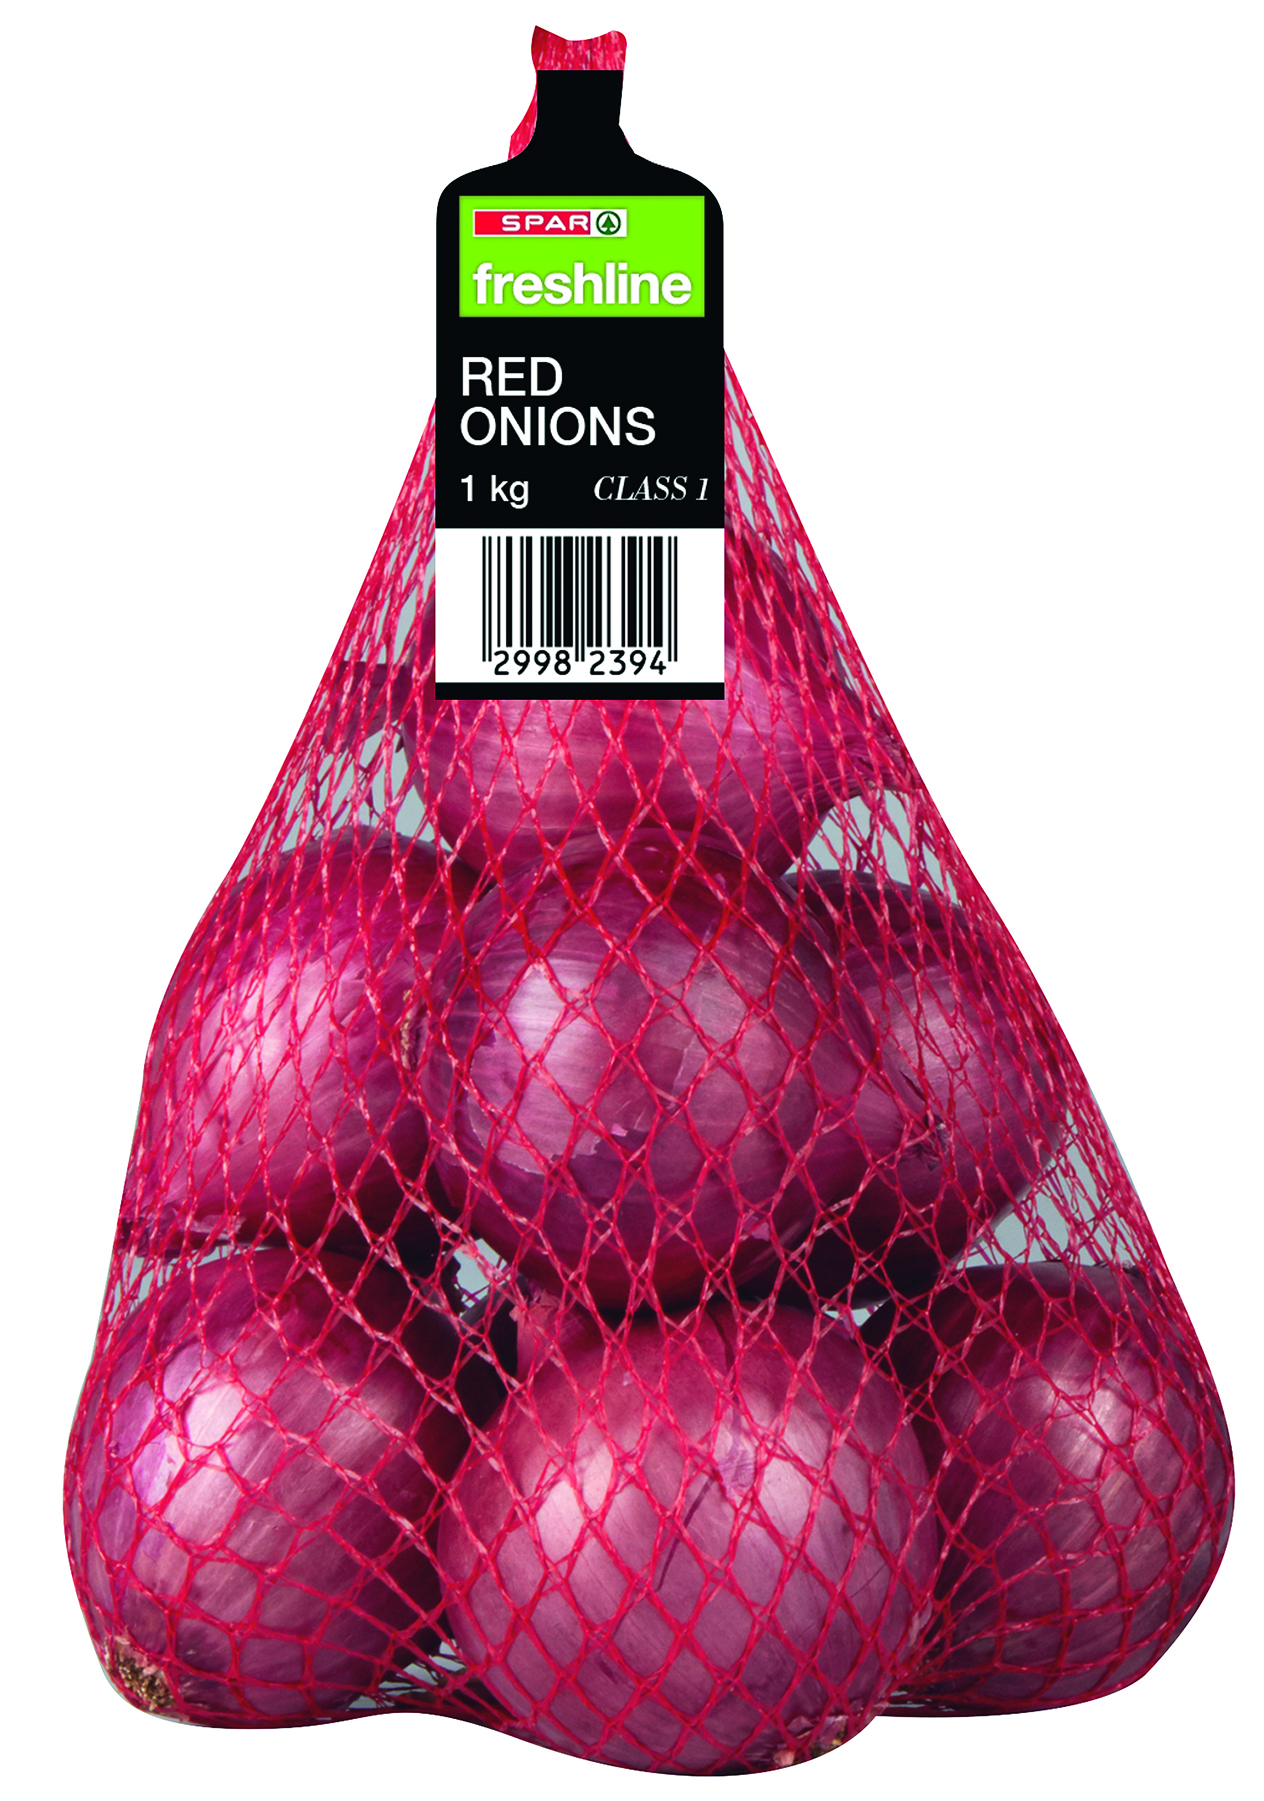 freshline red onions